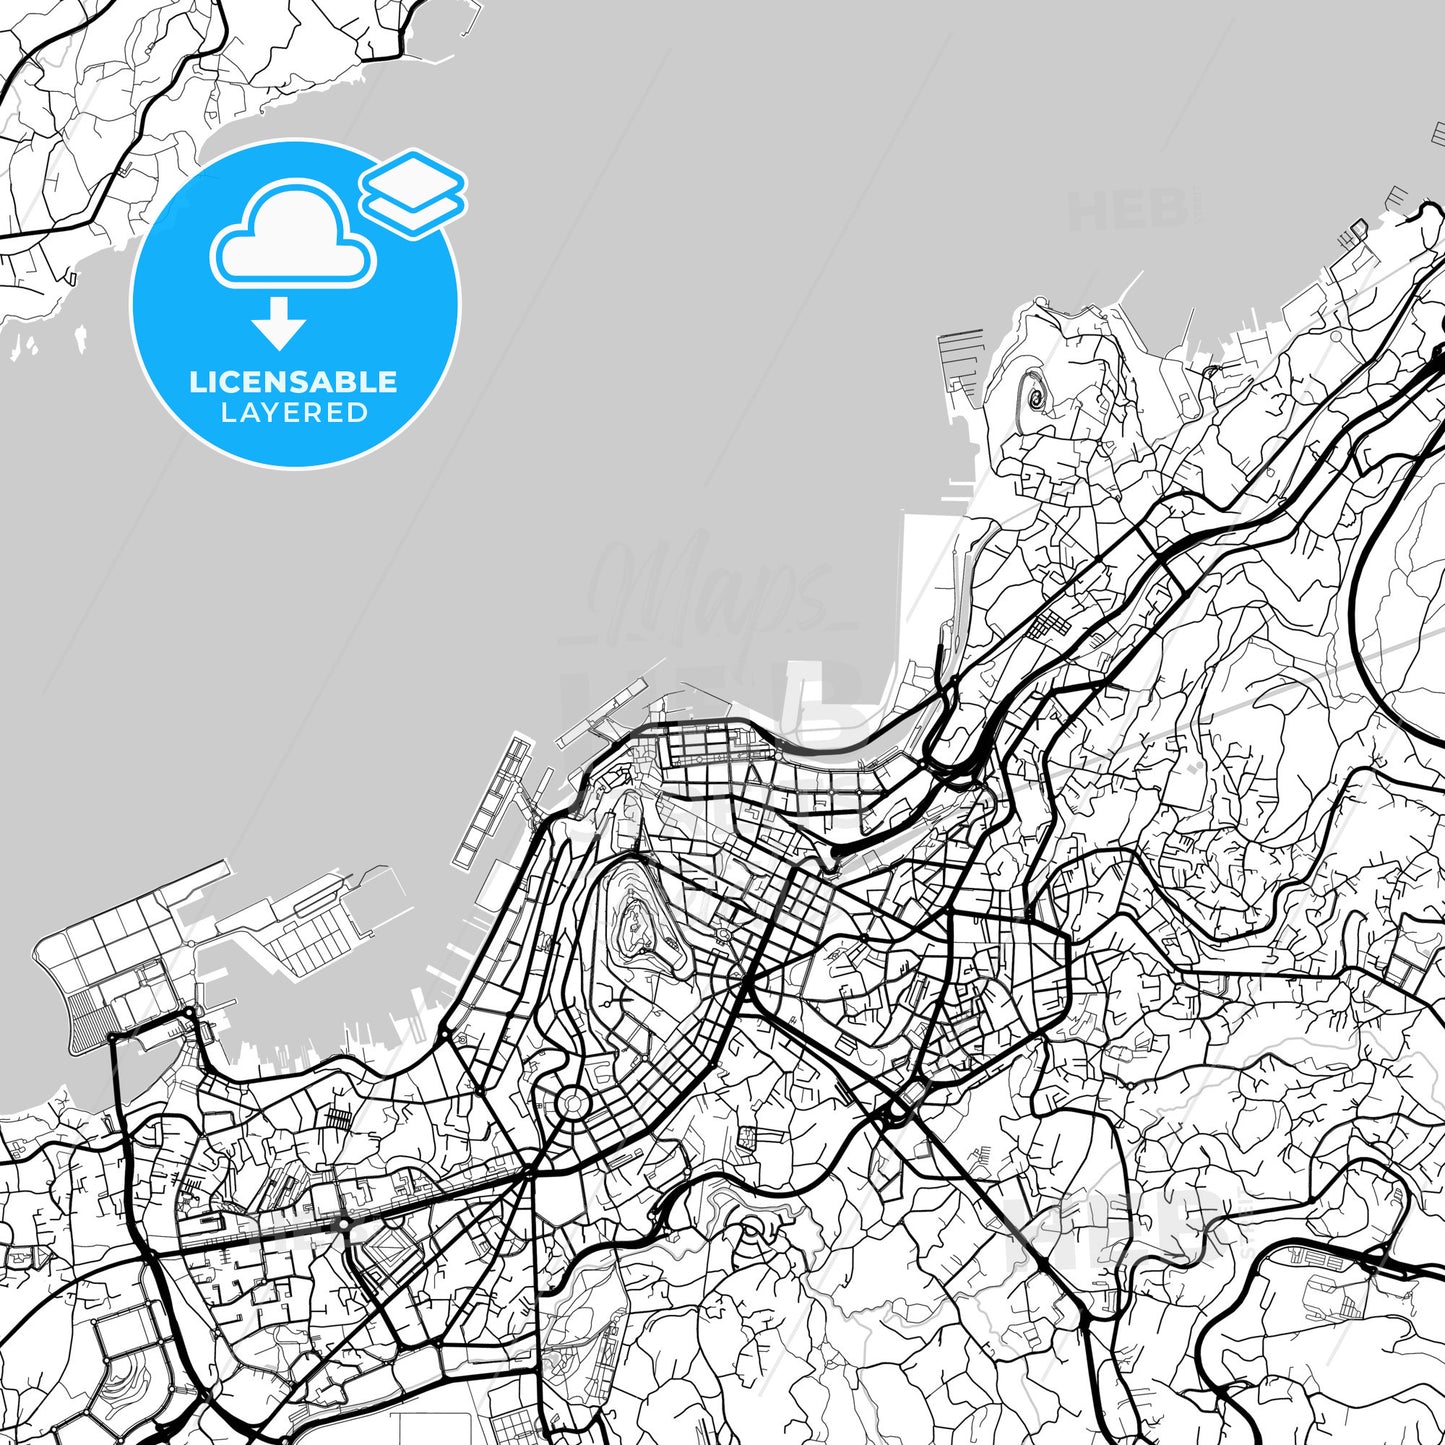 Layered PDF map of Vigo, Pontevedra, Spain